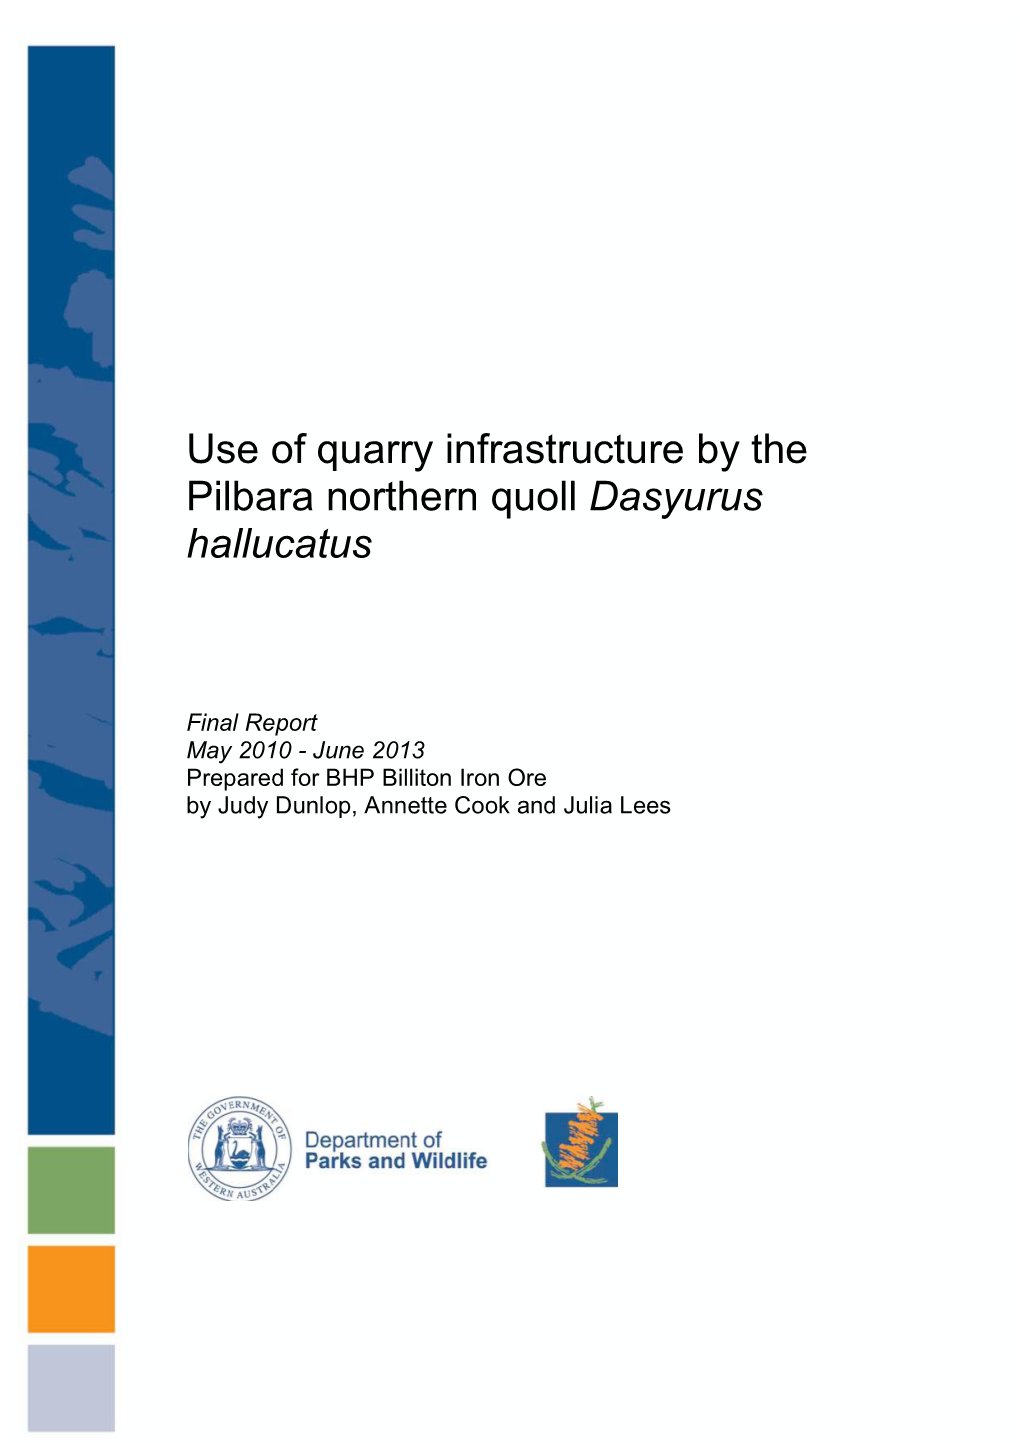 Use of Quarry Infrastructure by the Pilbara Northern Quoll Dasyurus Hallucatus